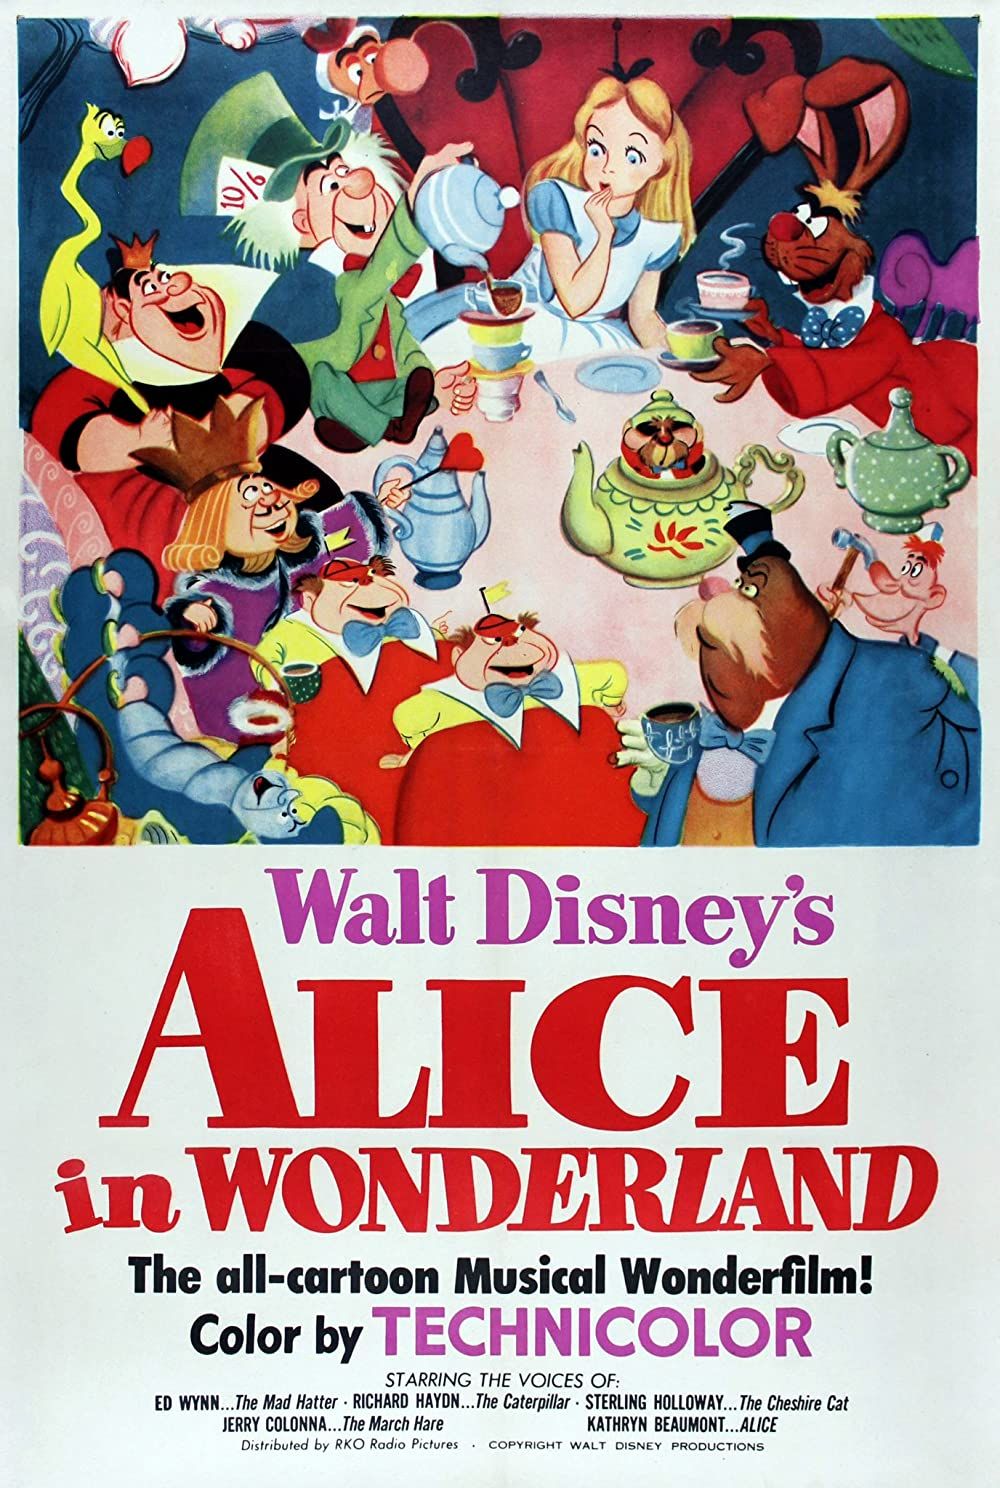 David Hayter American McGee's Alice in Wonderland TV Show Happening